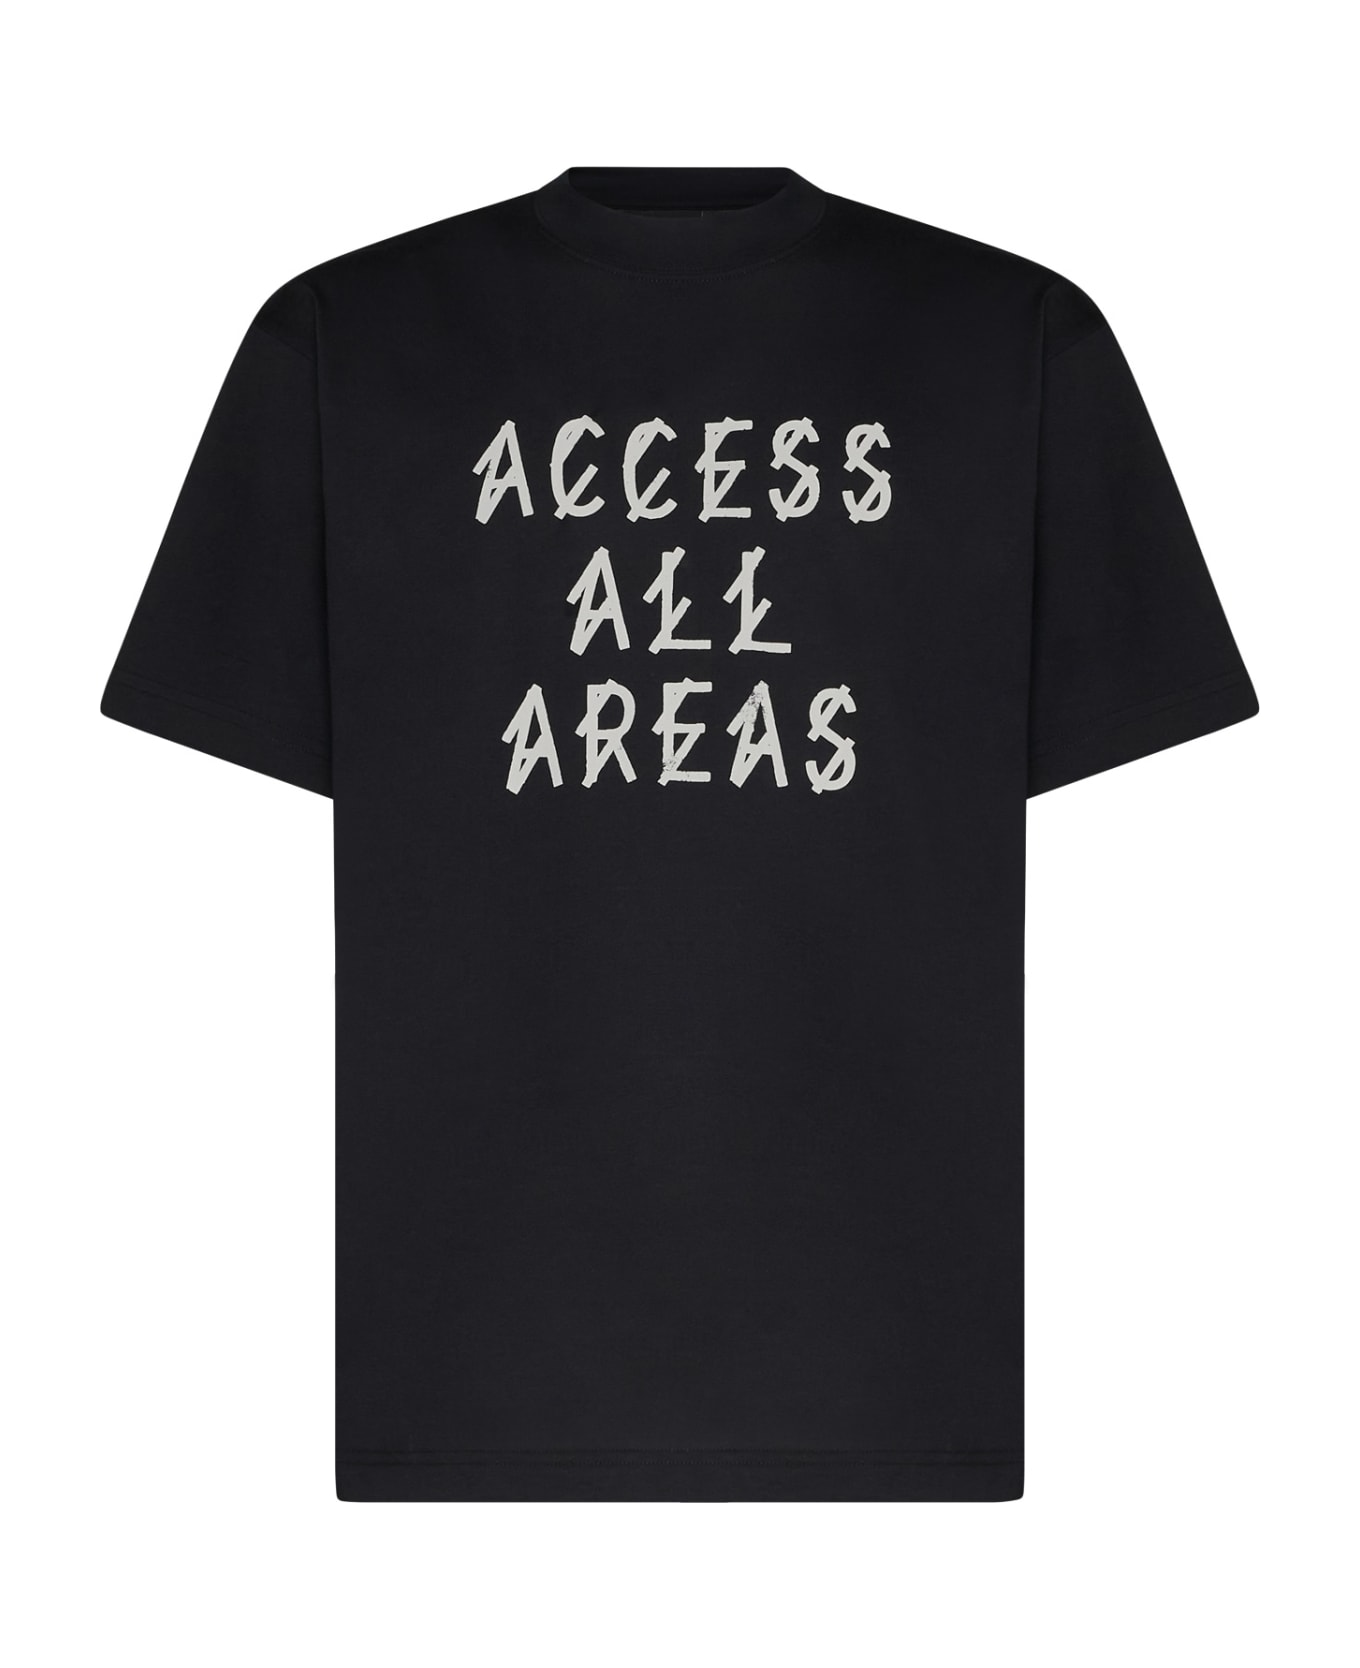 44 Label Group T-Shirt - Black+aaa print シャツ